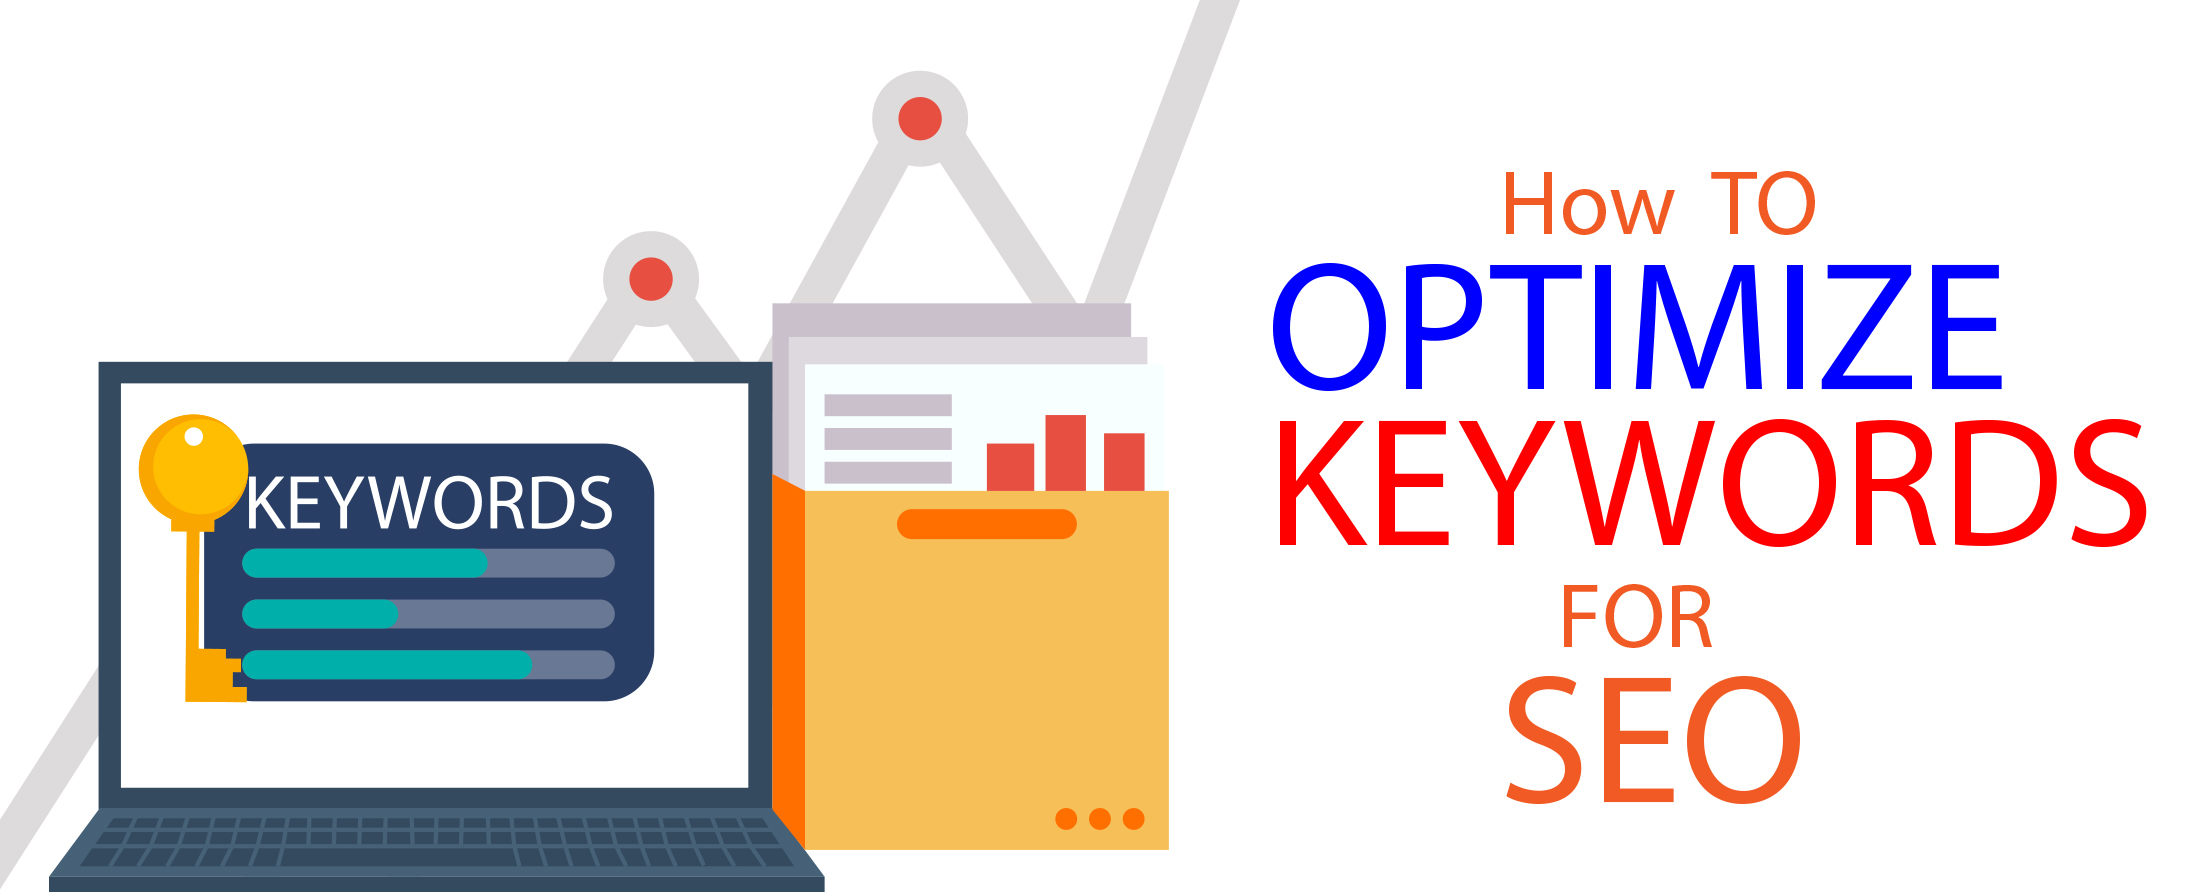 Keyword Optimization: How to optimize keywords for SEO